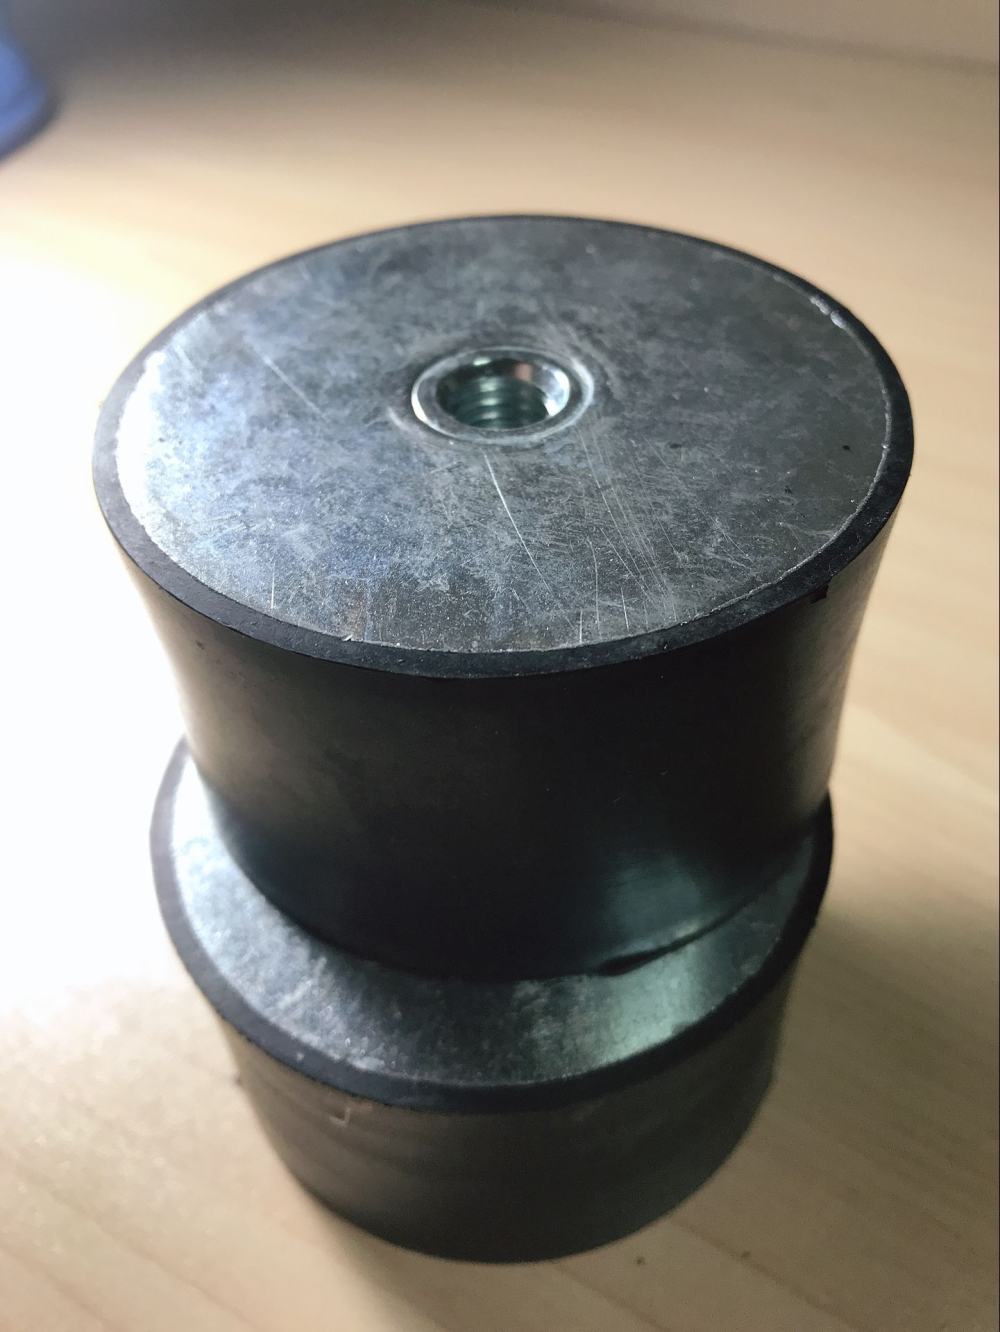 custom shock absorber anti vibration rubber damper